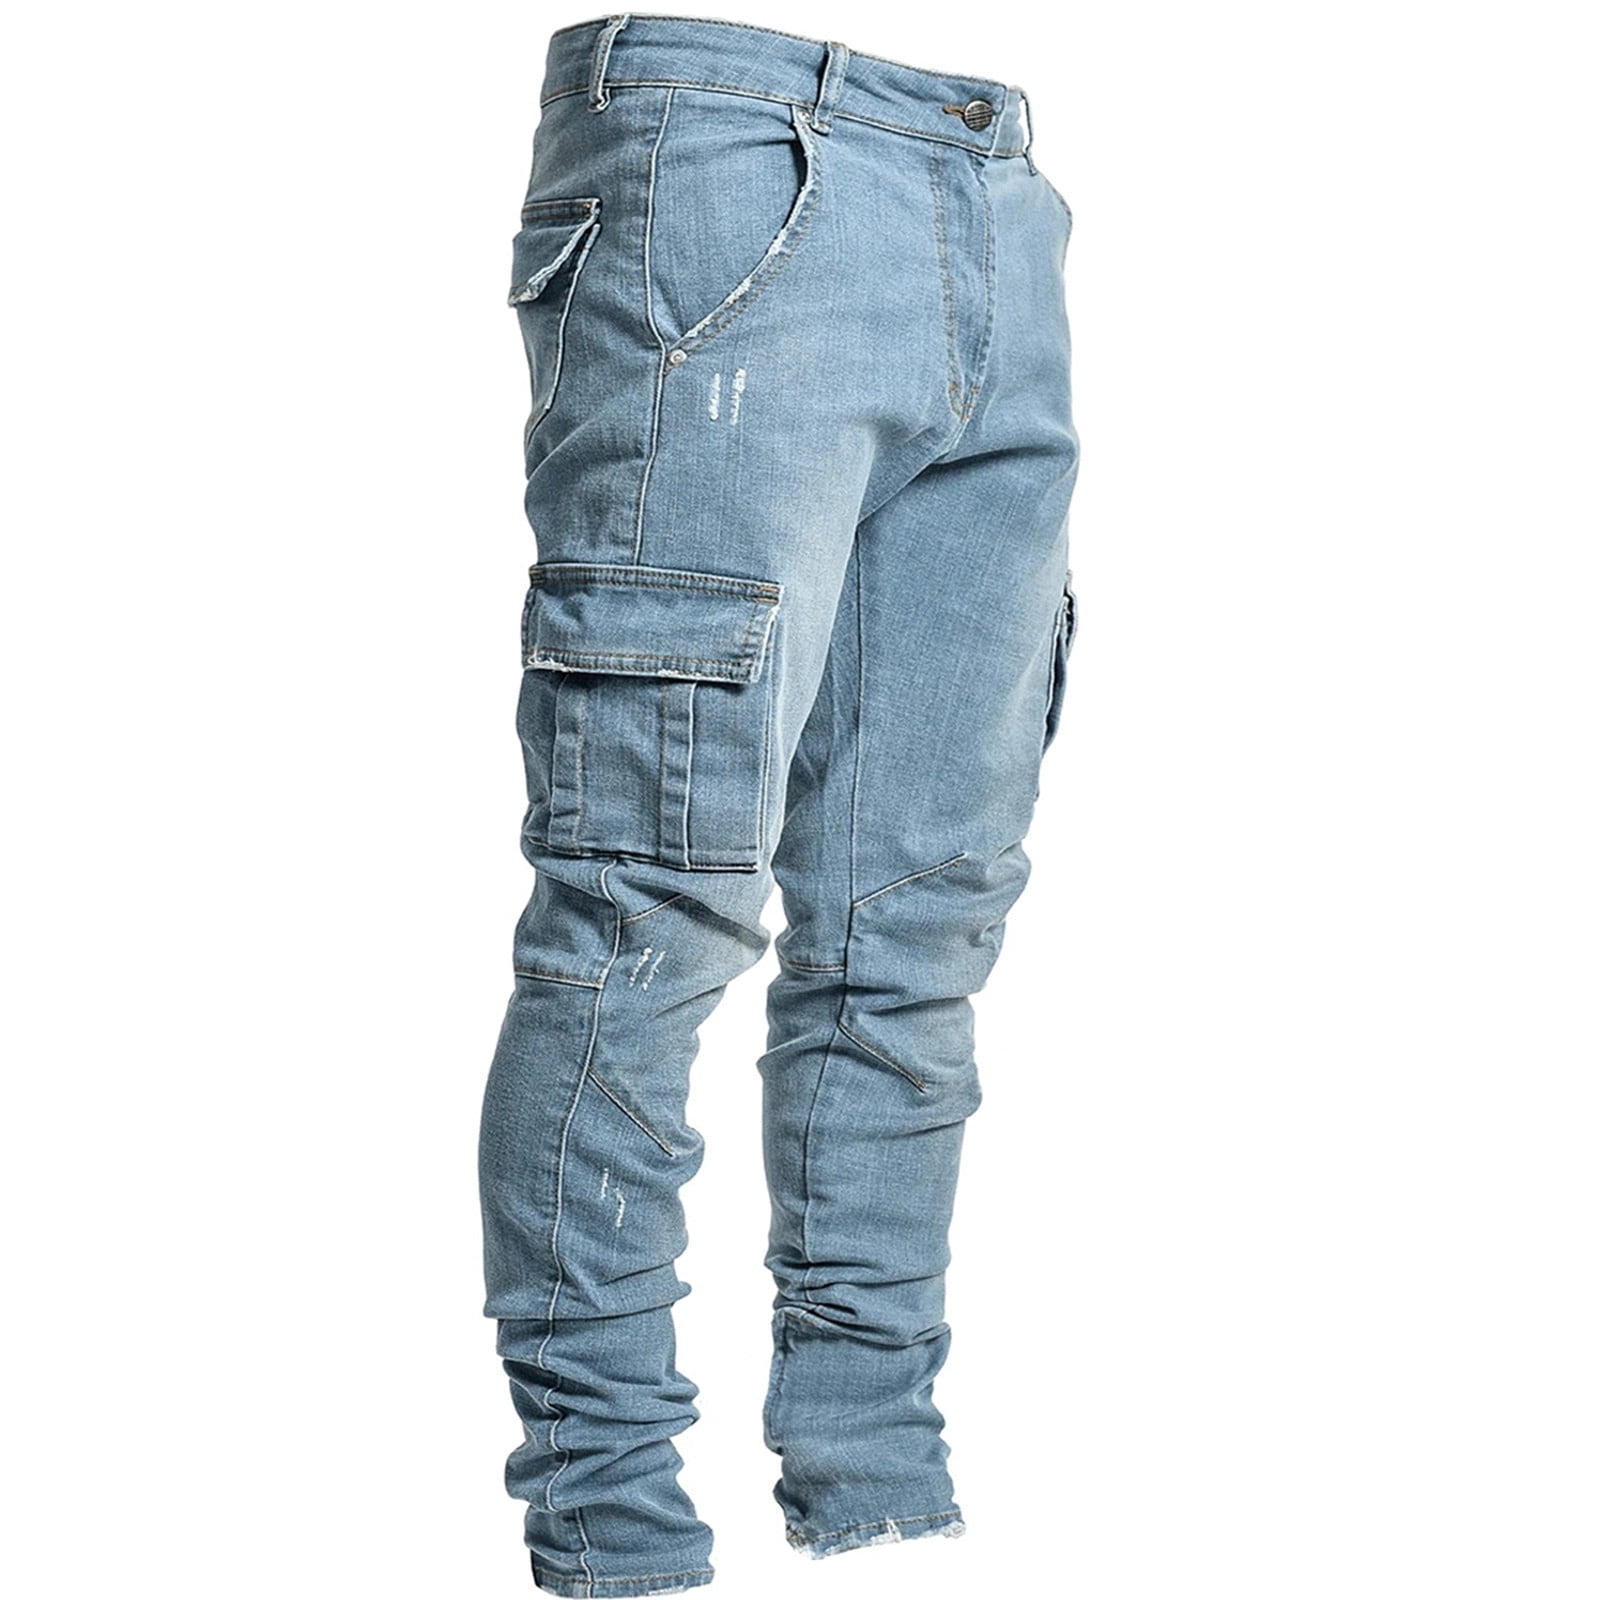 Jeans for Men Men's Side Pocket Trousers with Zipper Placket